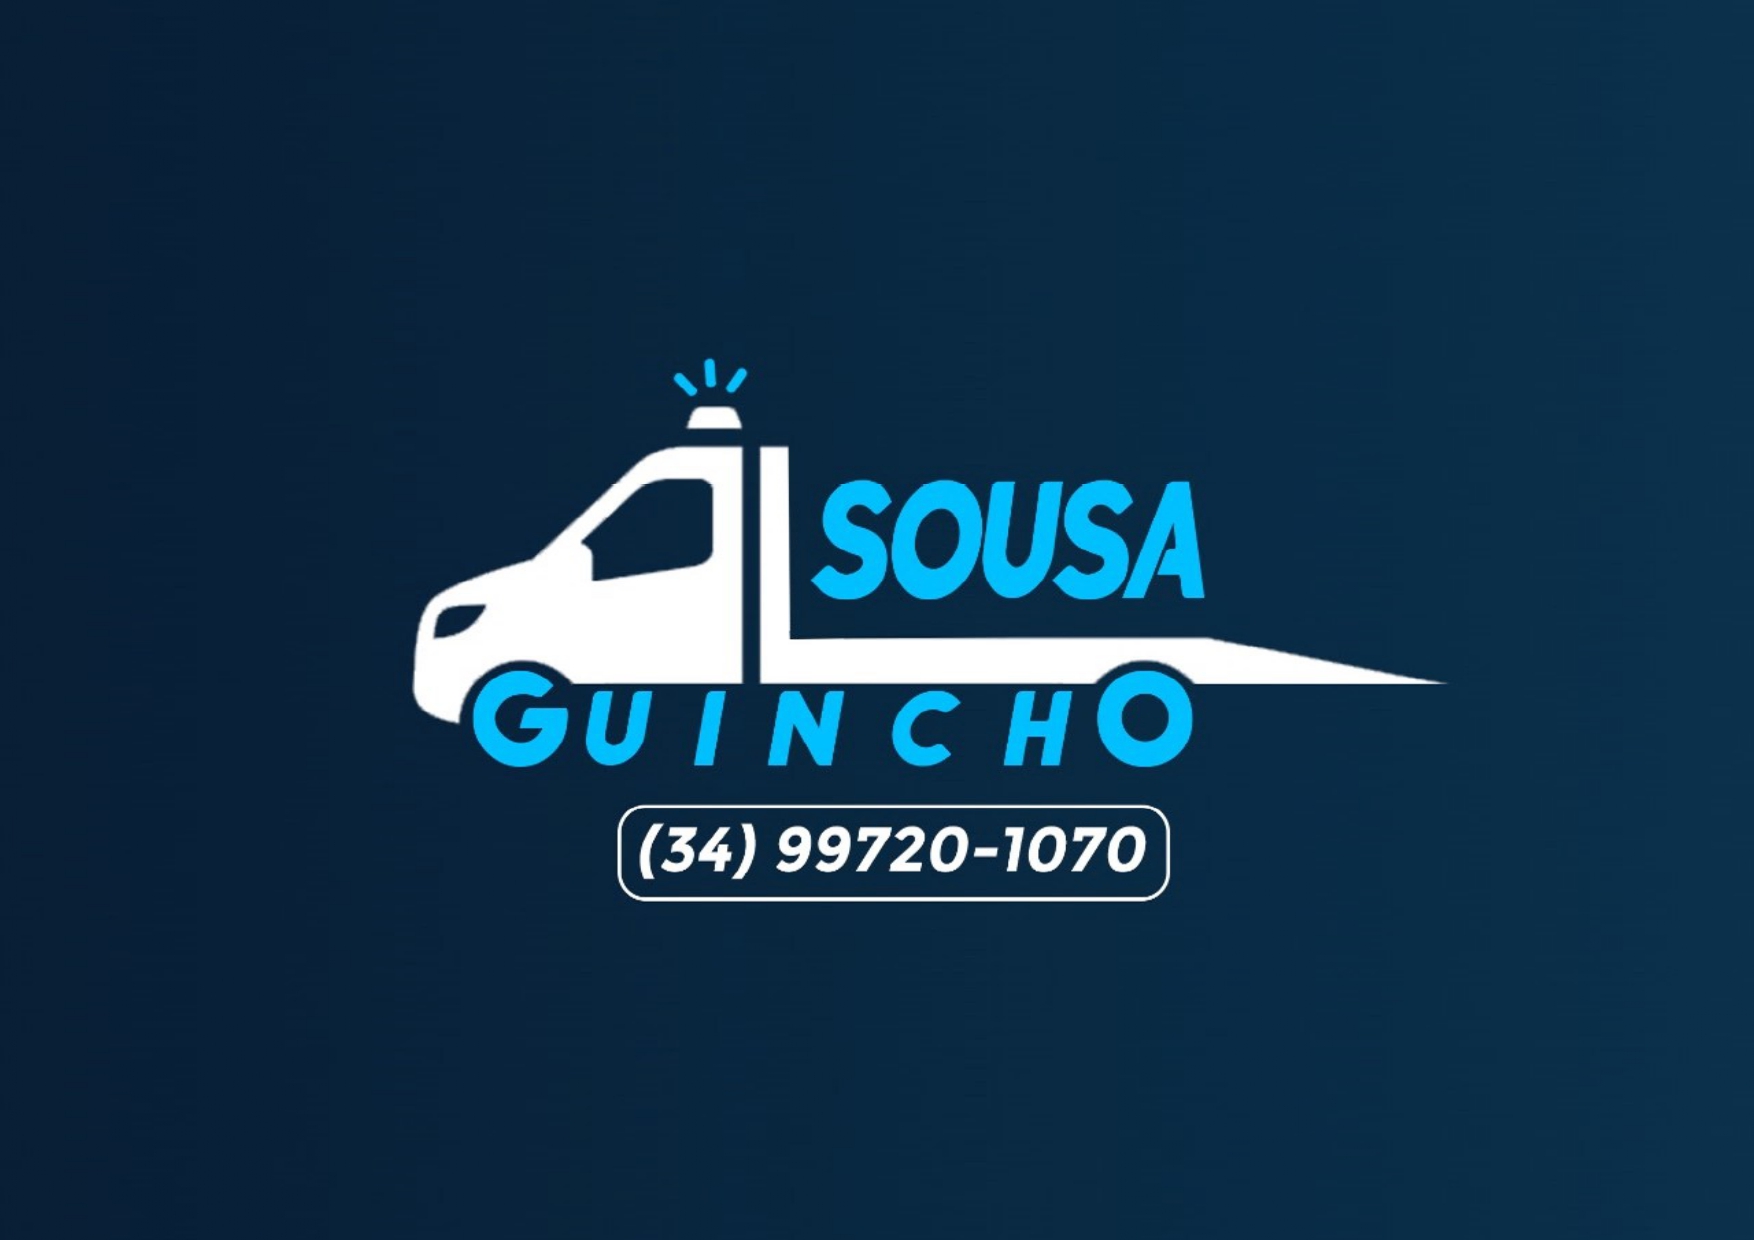 Sousa Guincho